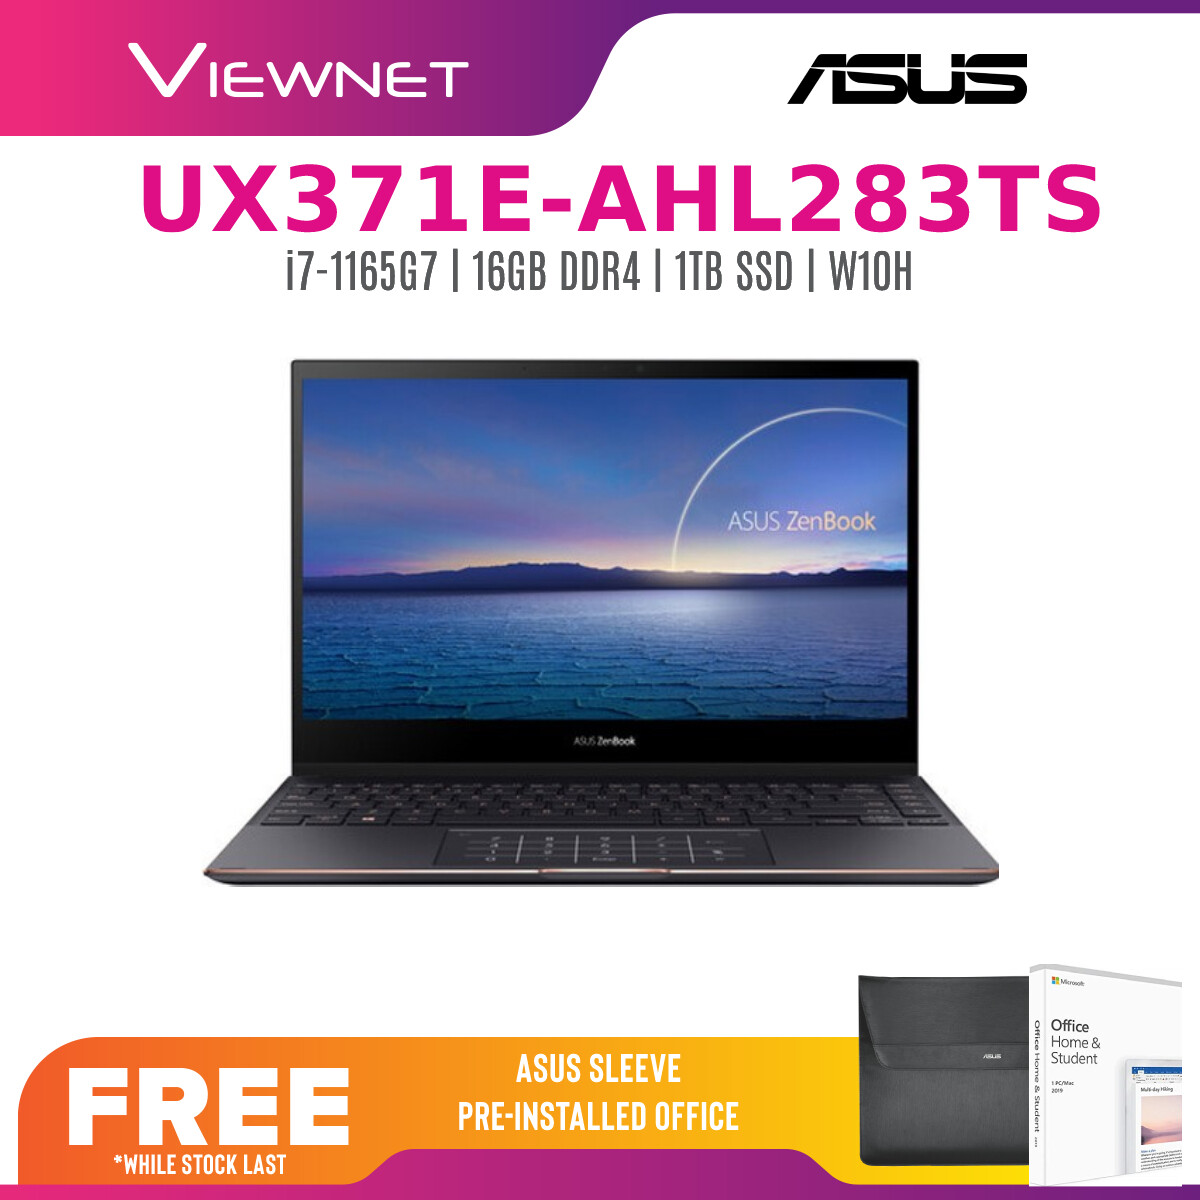 Asus ZenBook Flip S13 UX371E-AHL283TS 13.3'' UHD Touch Laptop Jade Black ( i7-1165G7, 16GB, 1TB SSD, Intel, W10, HS ) Laptop